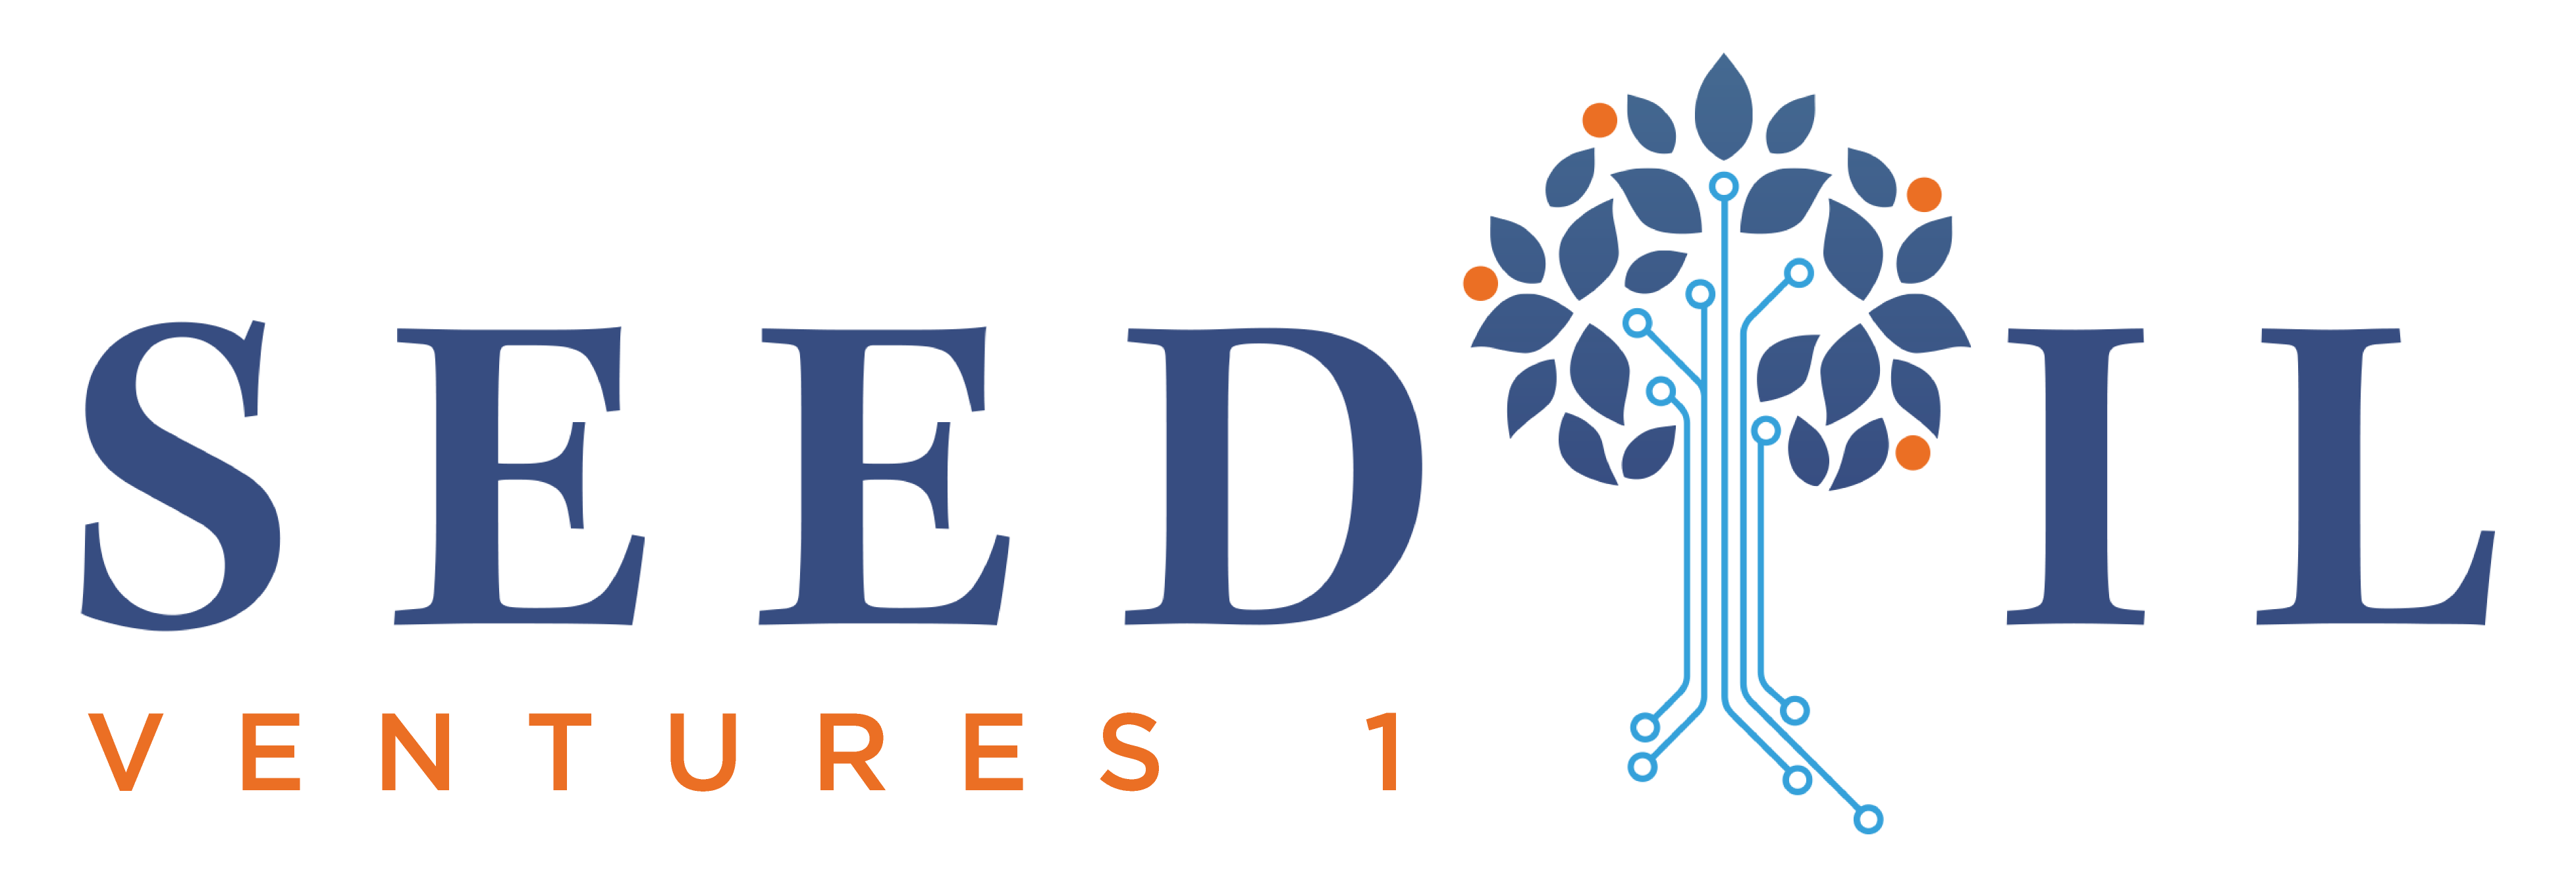 Seed-Il-ventures-transparent-logo-color